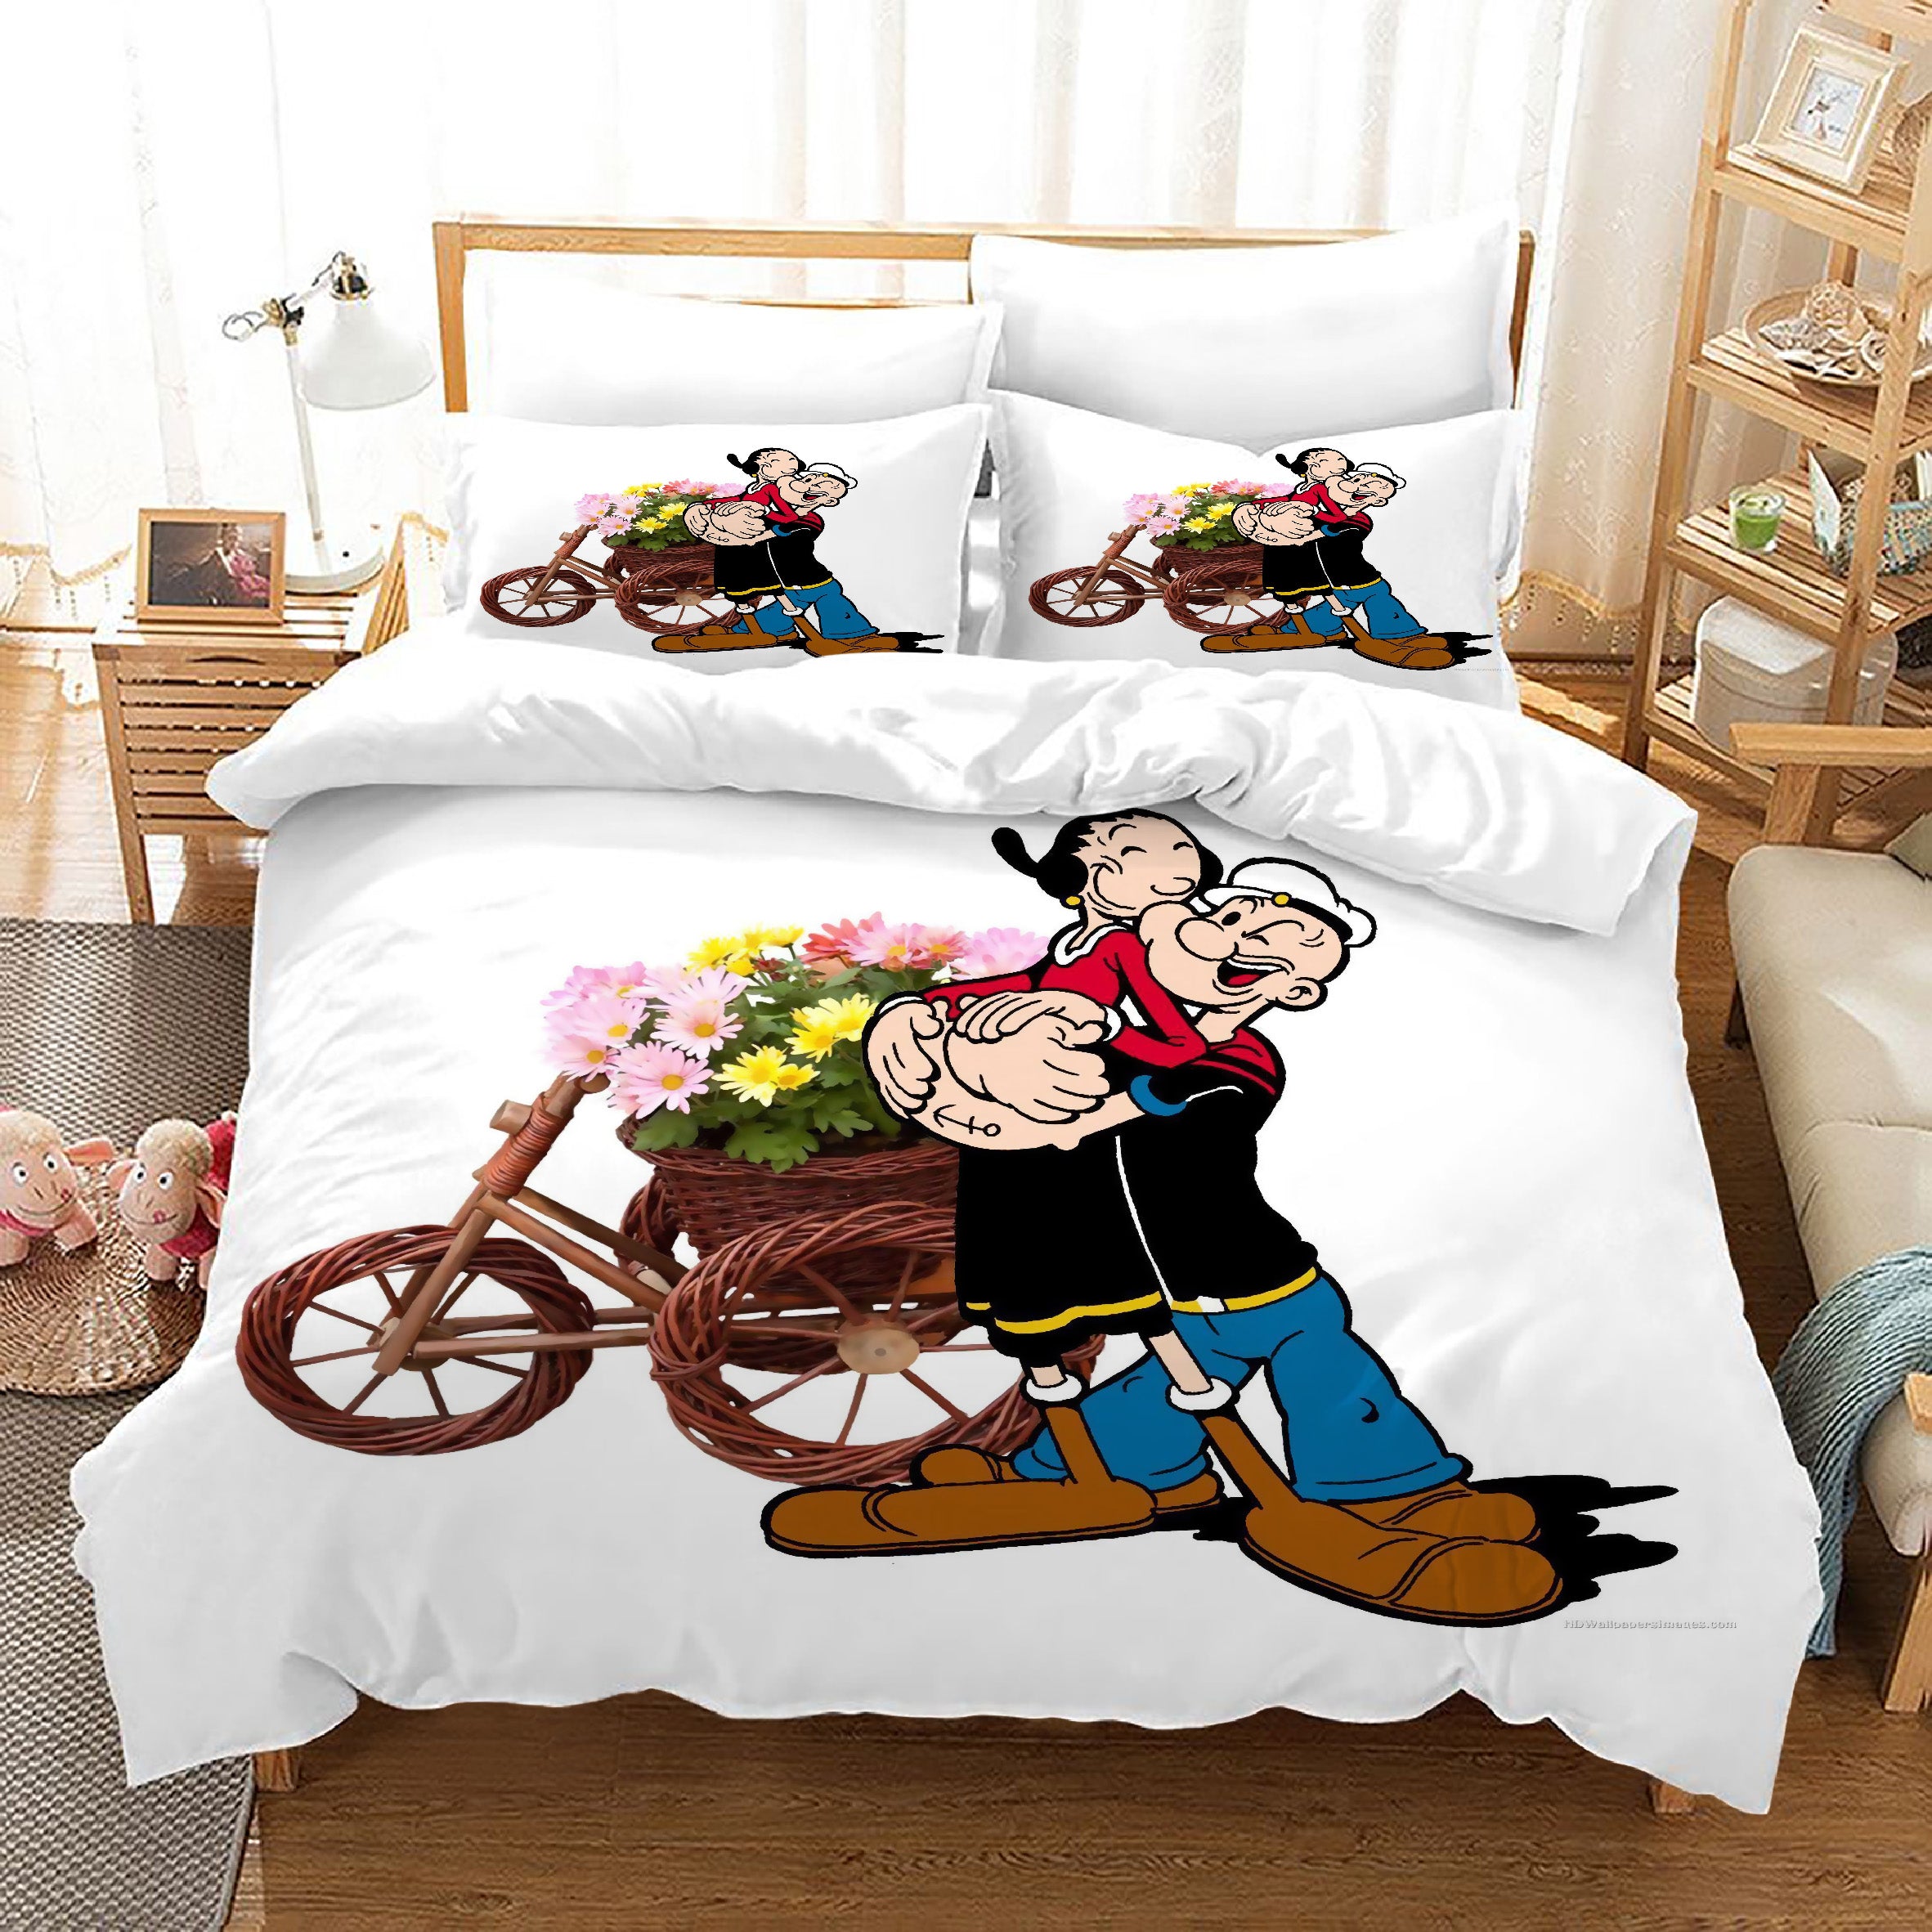 Popeye the Sailor  Duvet Cover Quilt Cover Pillowcase Bedding Set Bed Linen